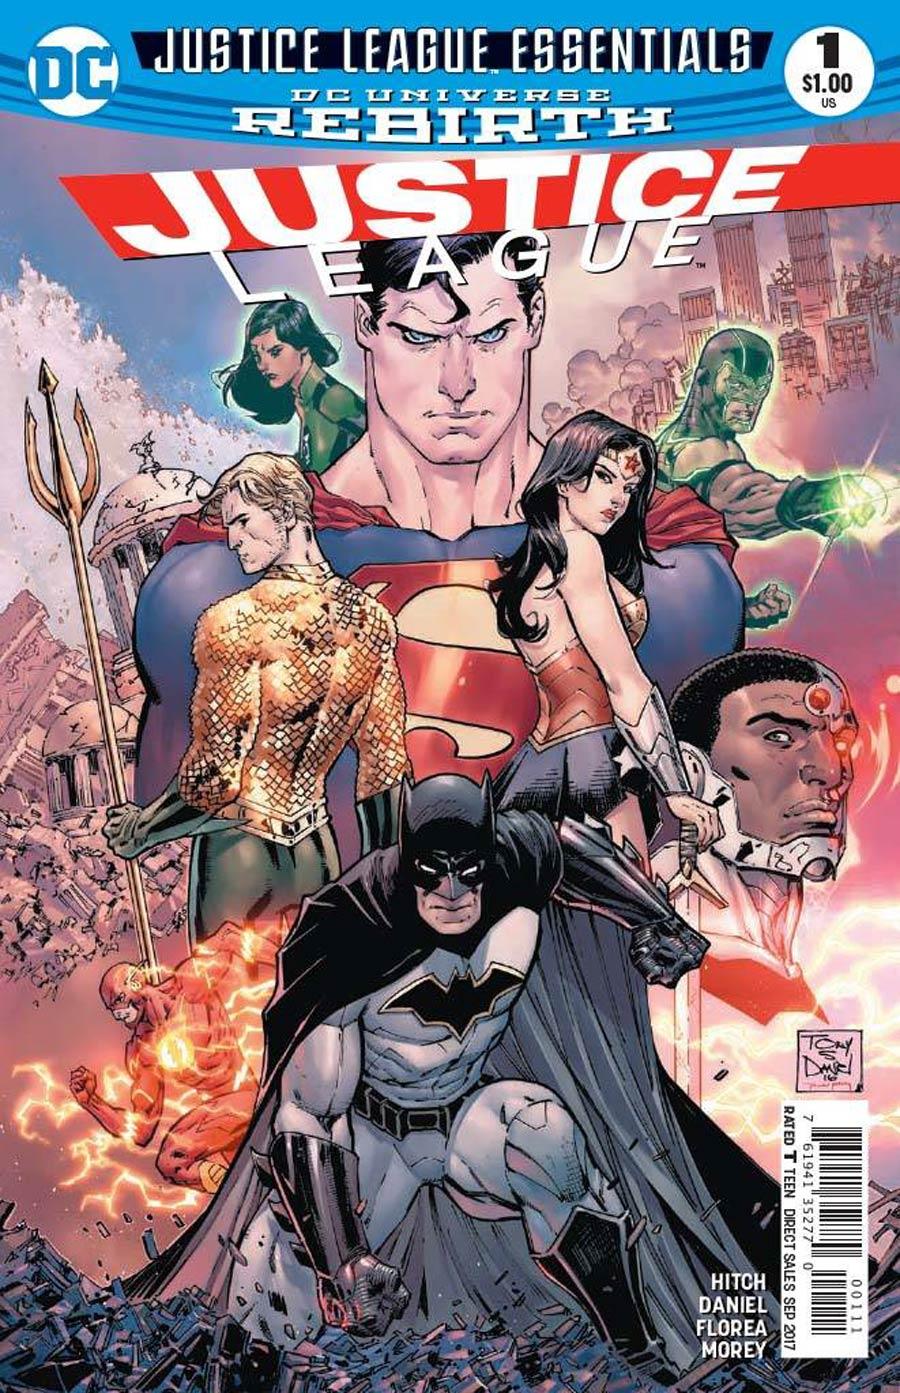 DC Justice League Essentials Justice League Vol. 1 #1